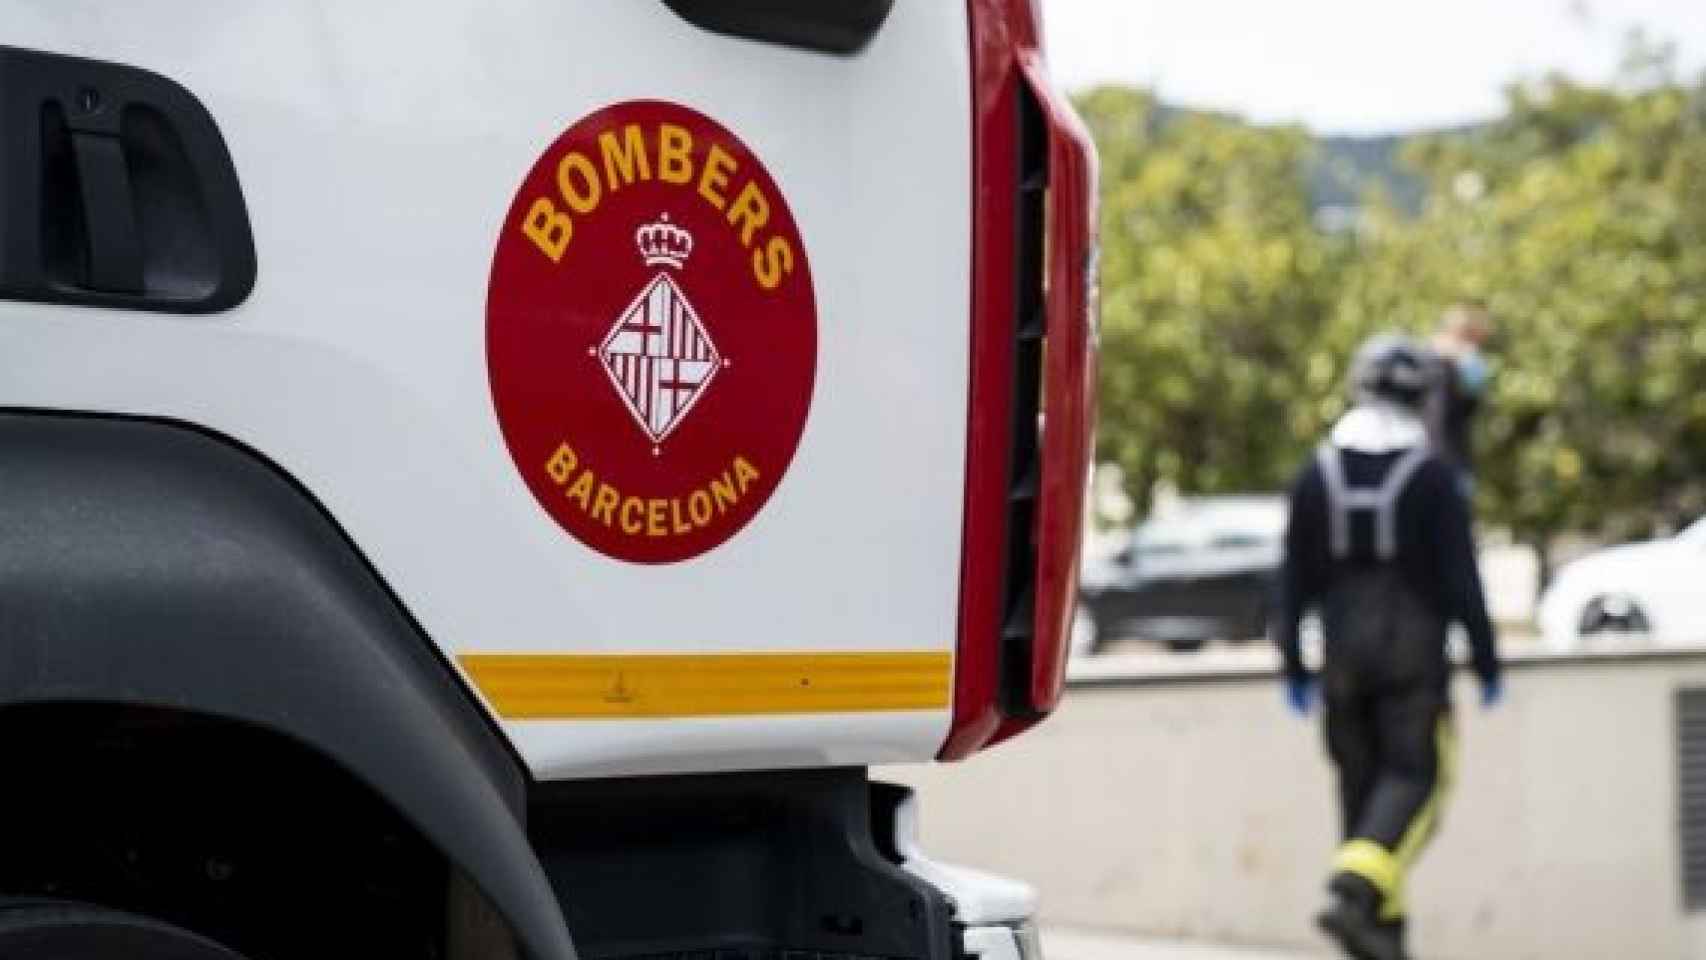 Un bombero de Barcelona durante un servicio